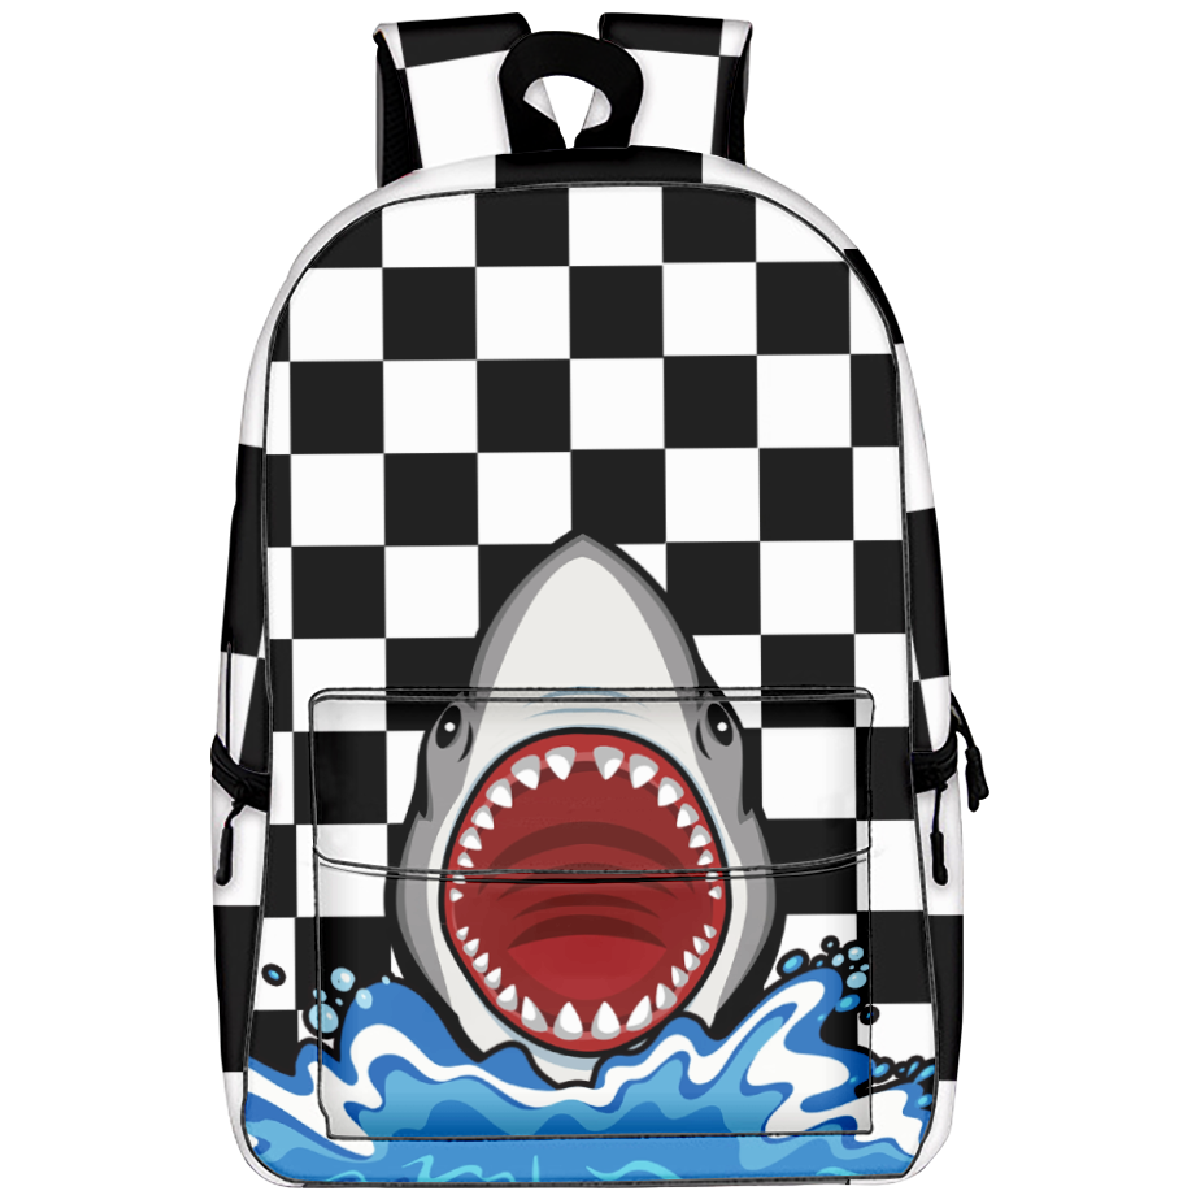 Shark Backpack Kids Allover Print School Bag Large Capacity Ideal Present